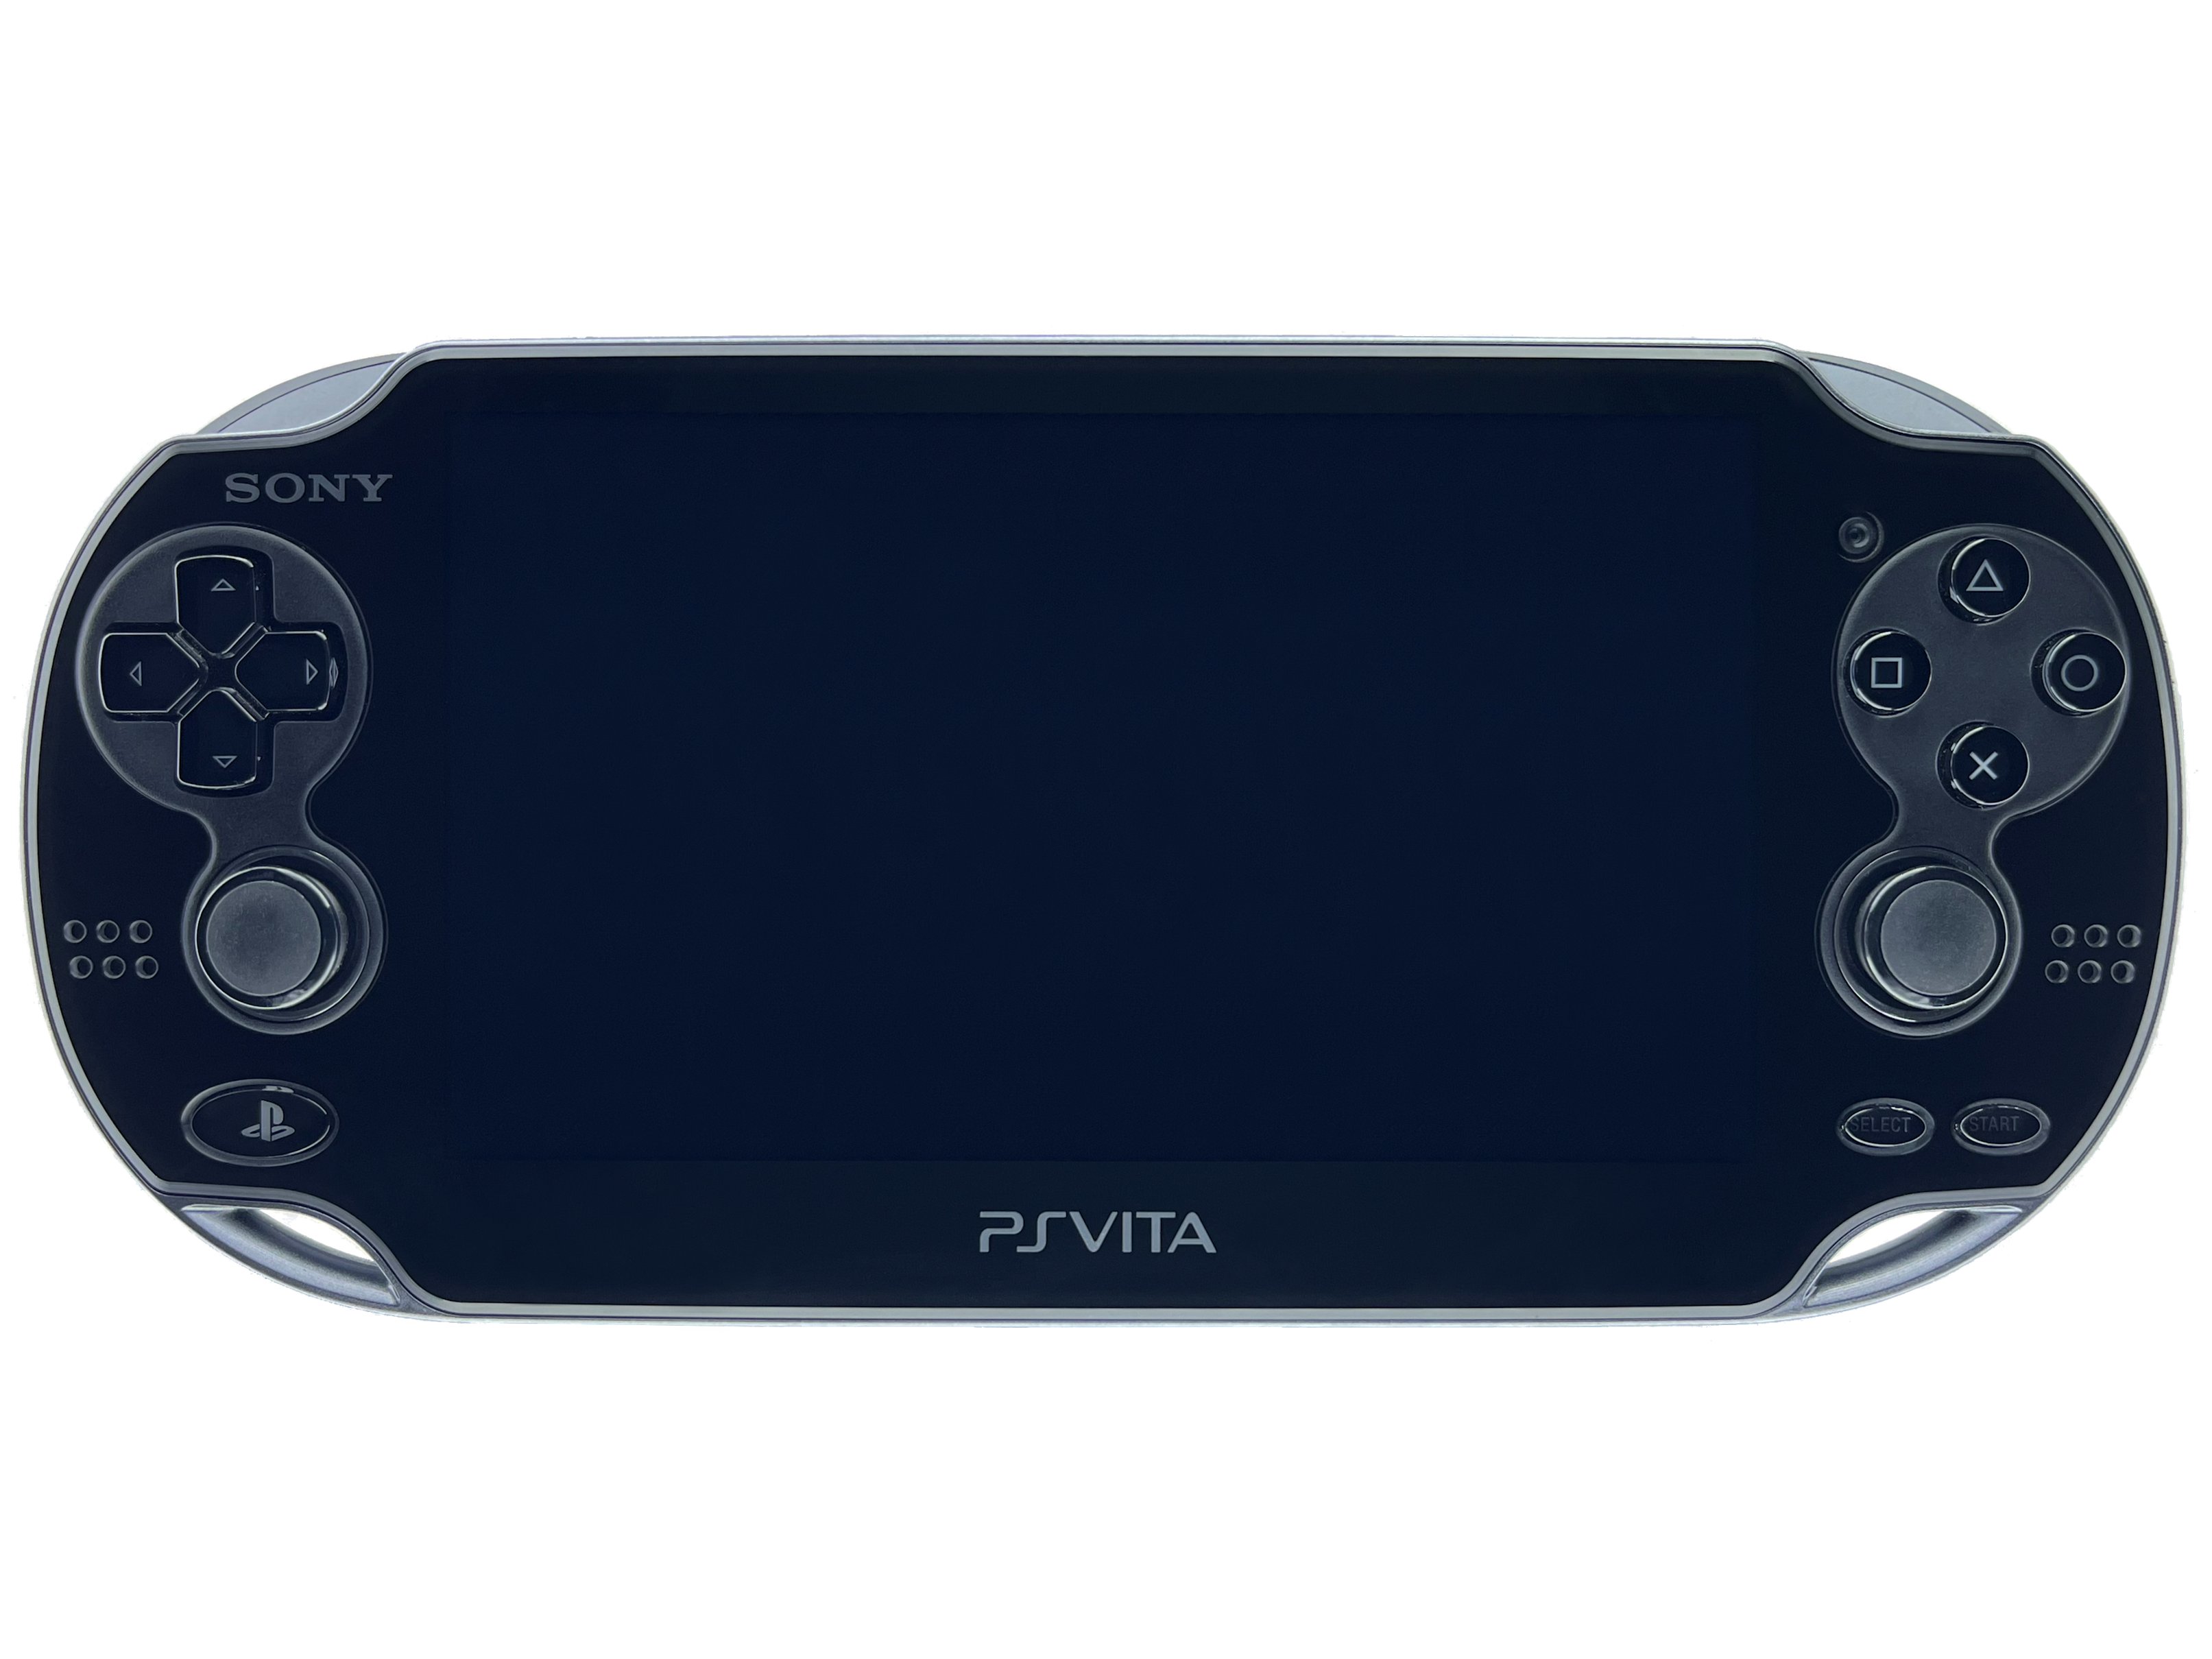  Sony PS Vita PTEL-1003 Testing Kit [EU]